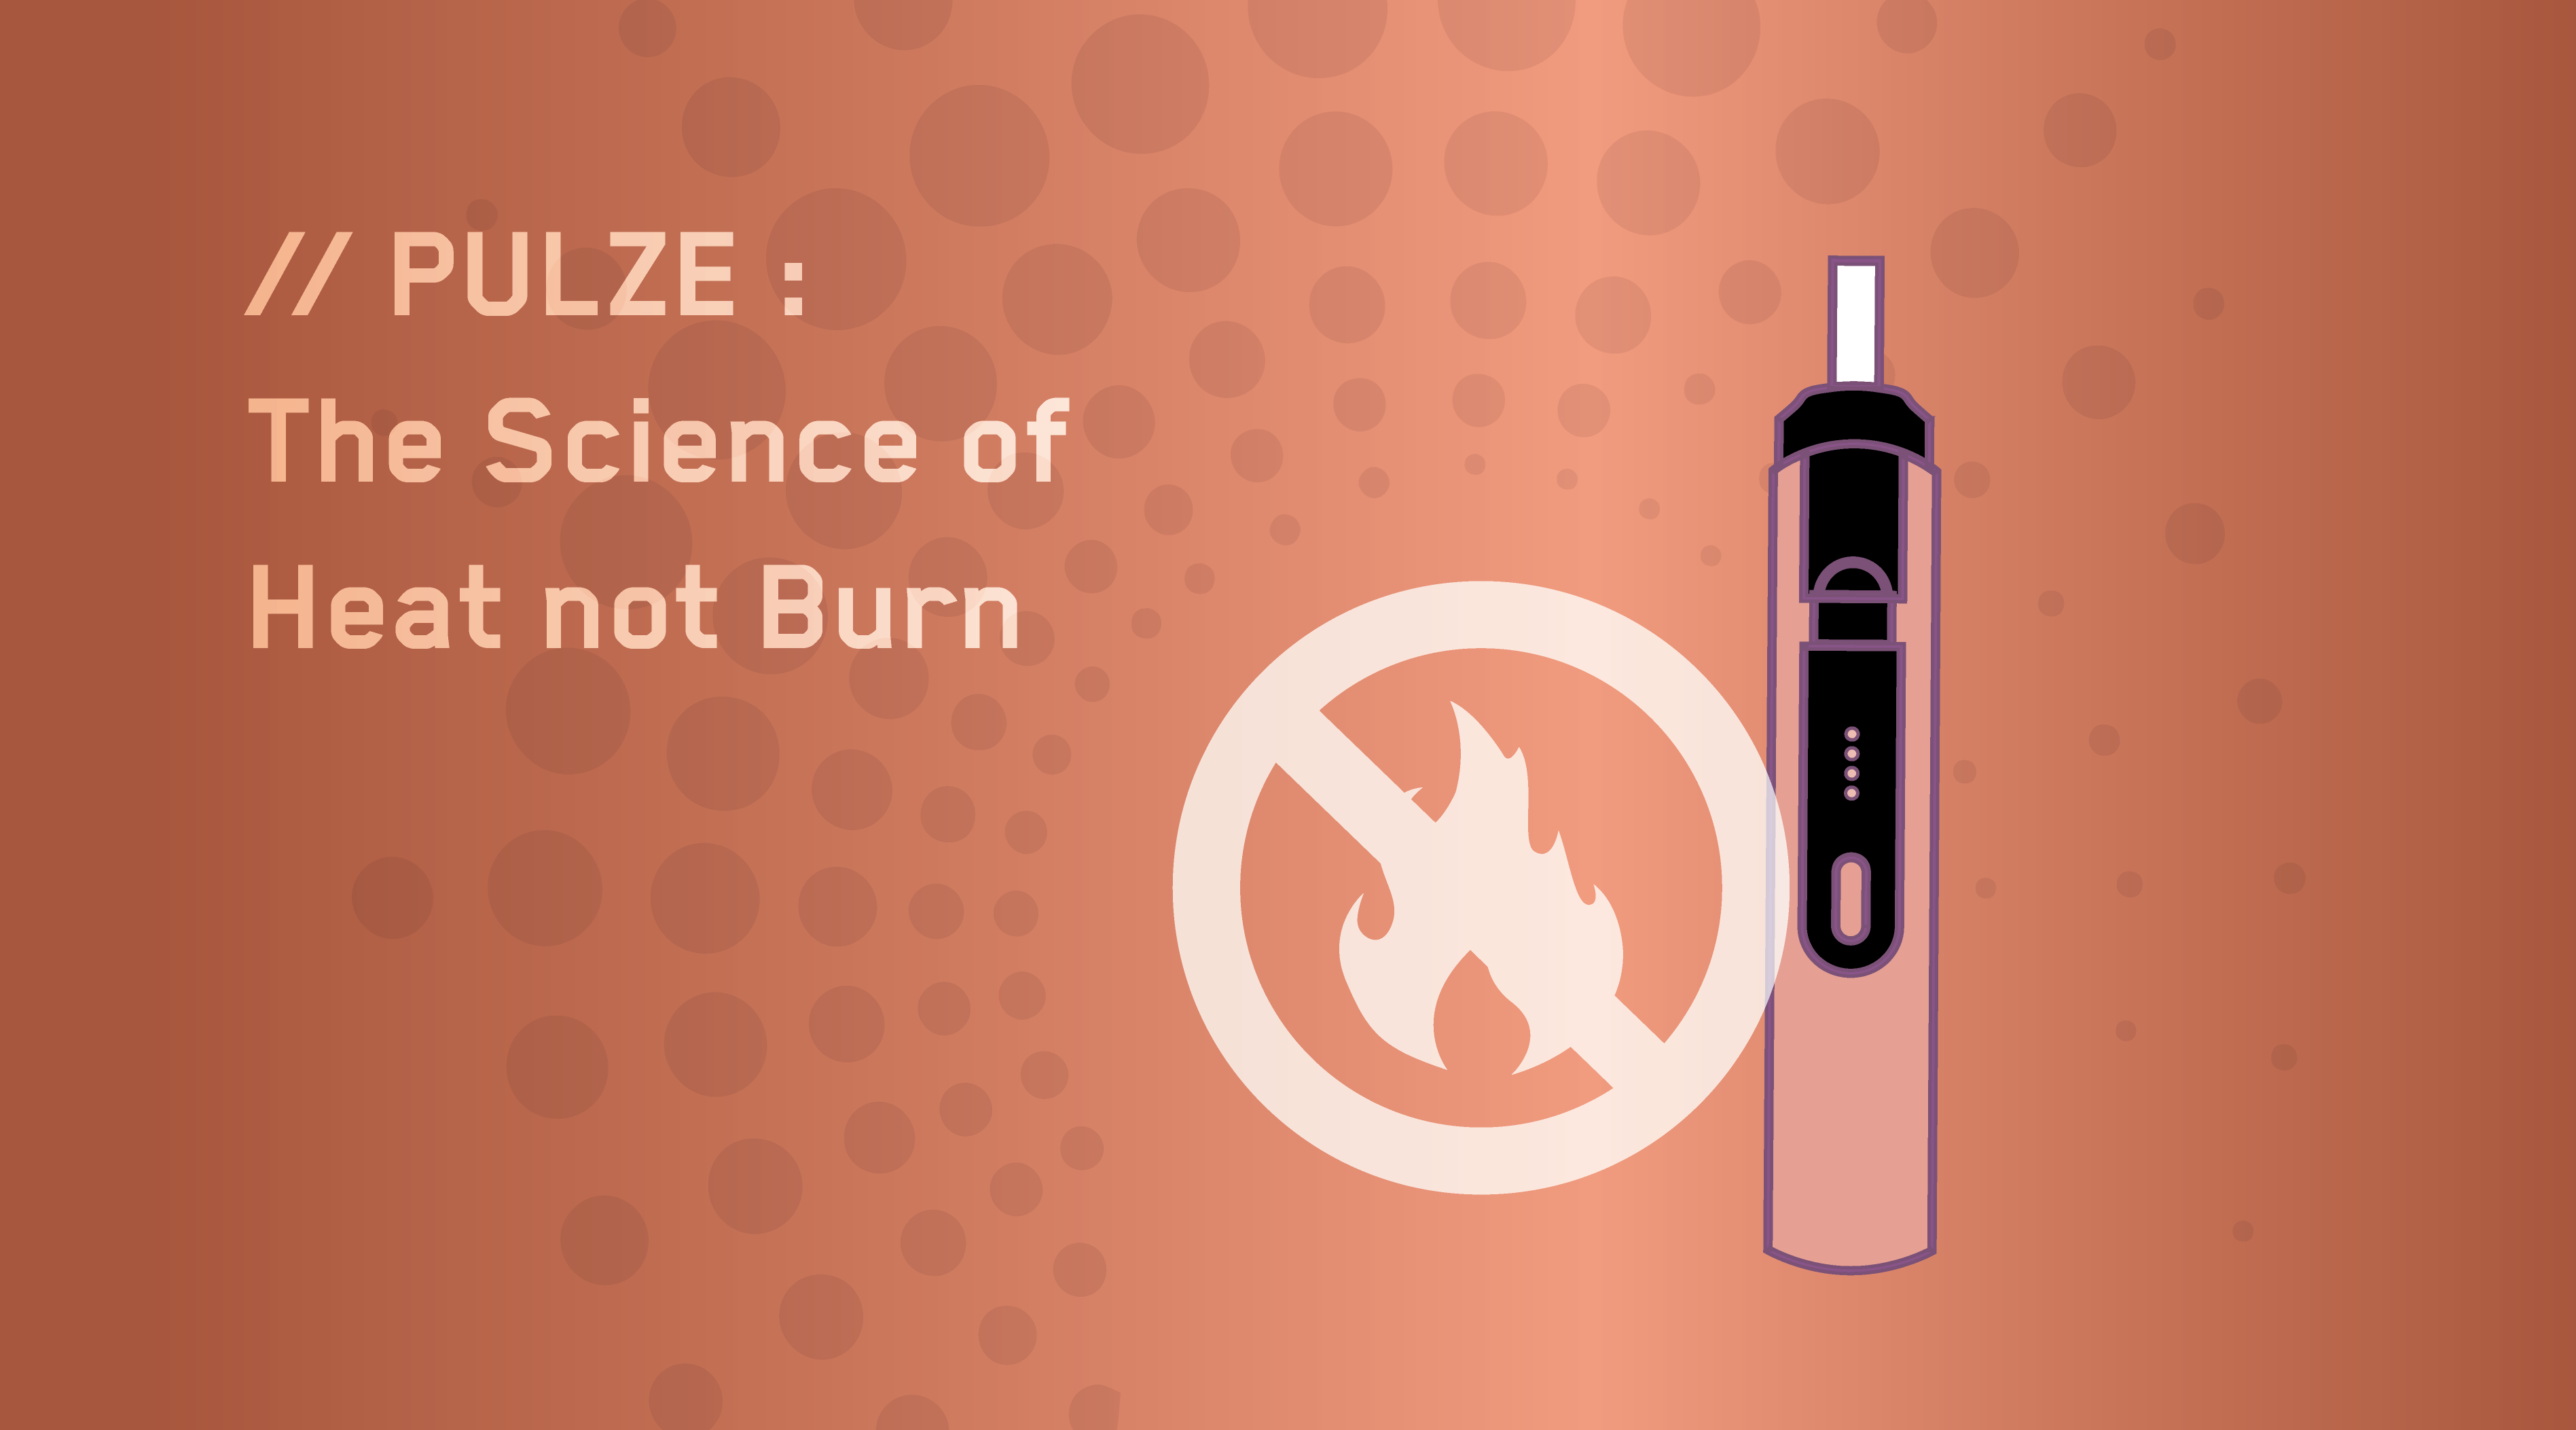 Pulze: The science of heat not burn